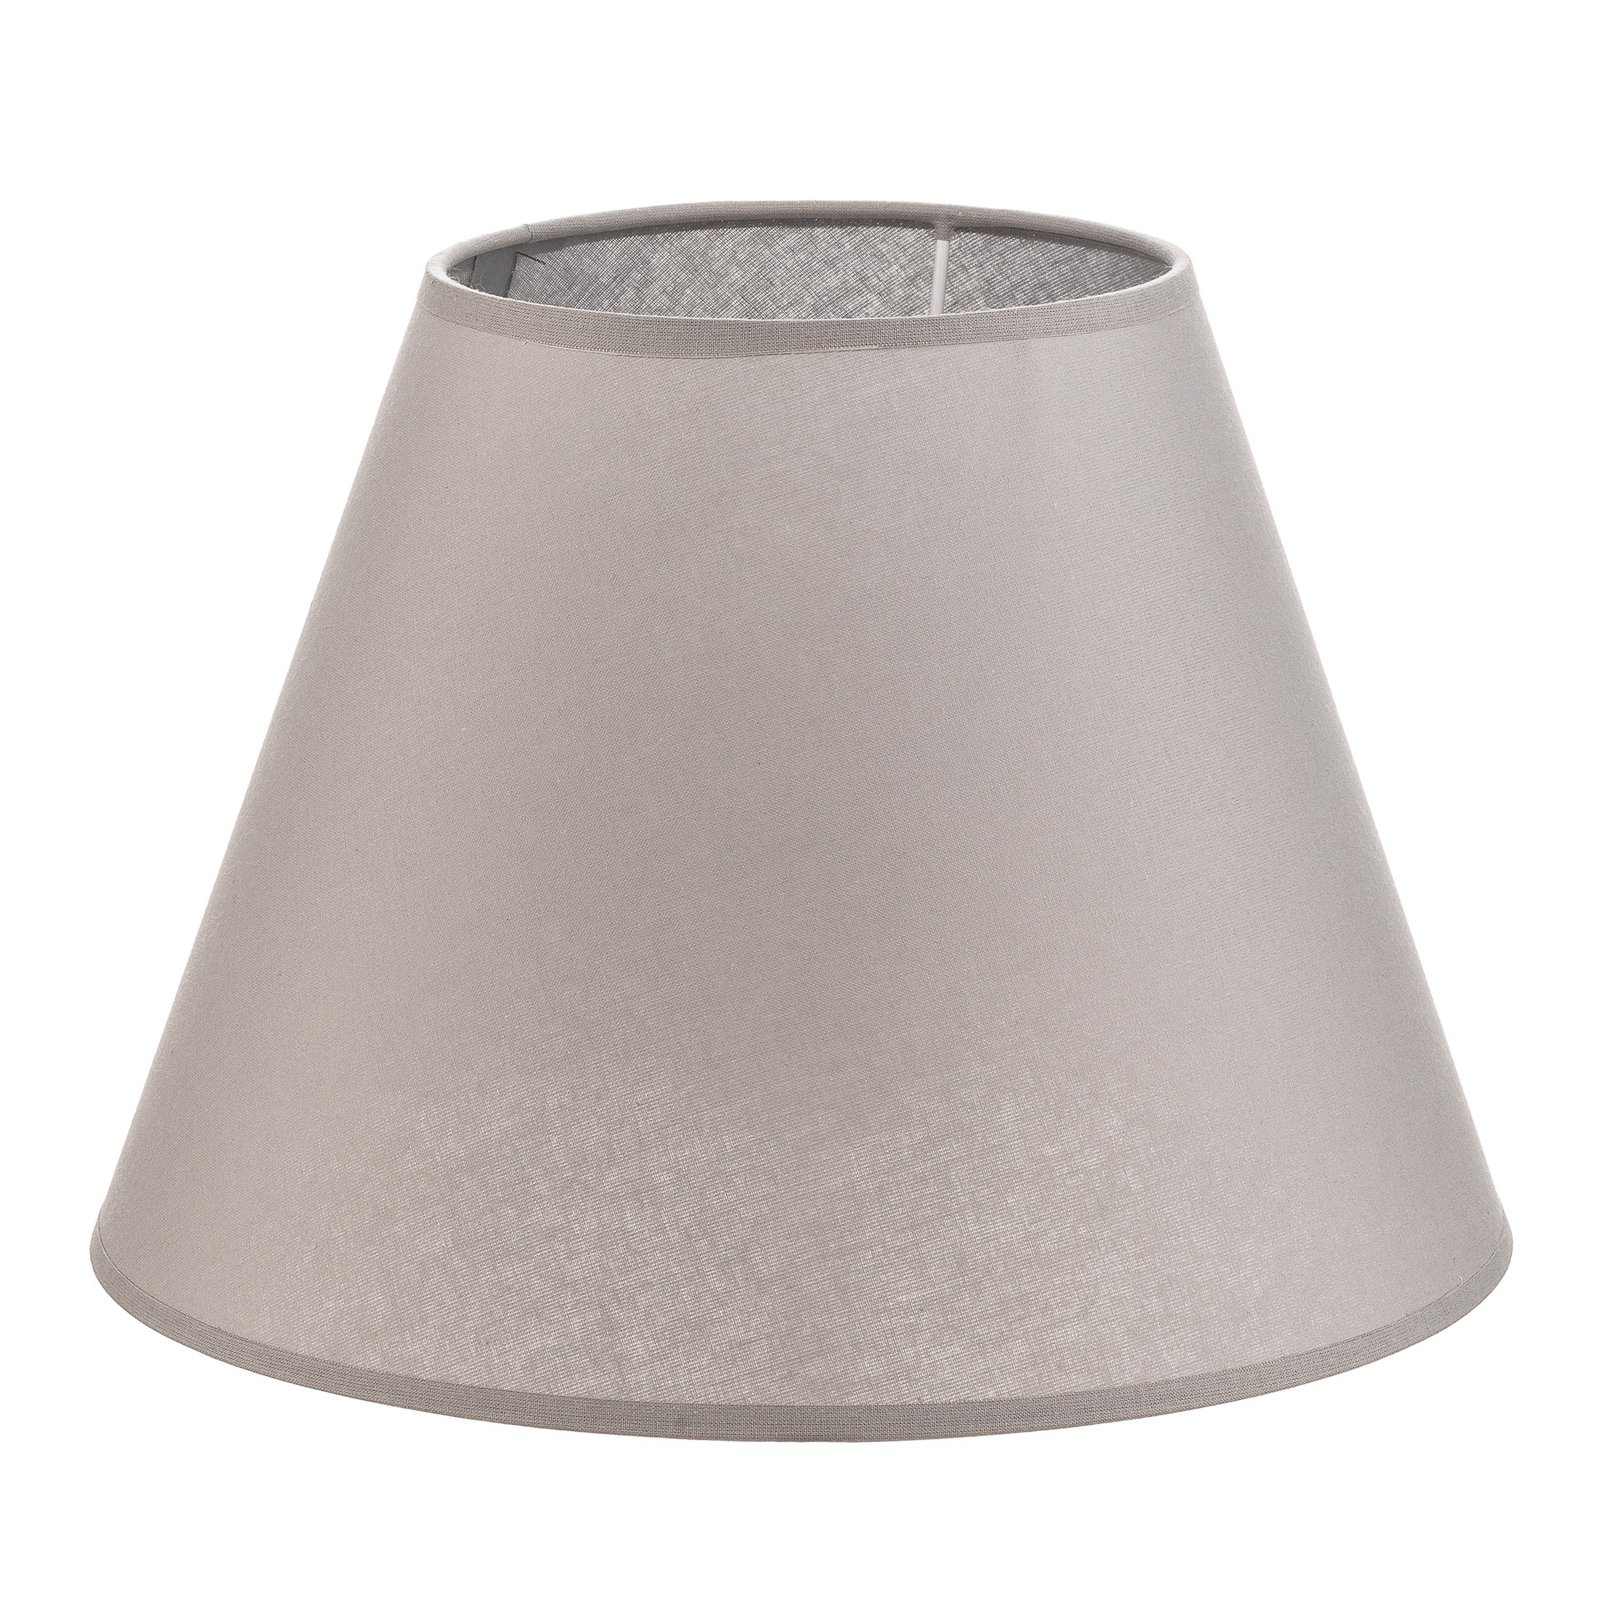 Sofia lampshade height 21 cm, grey/white